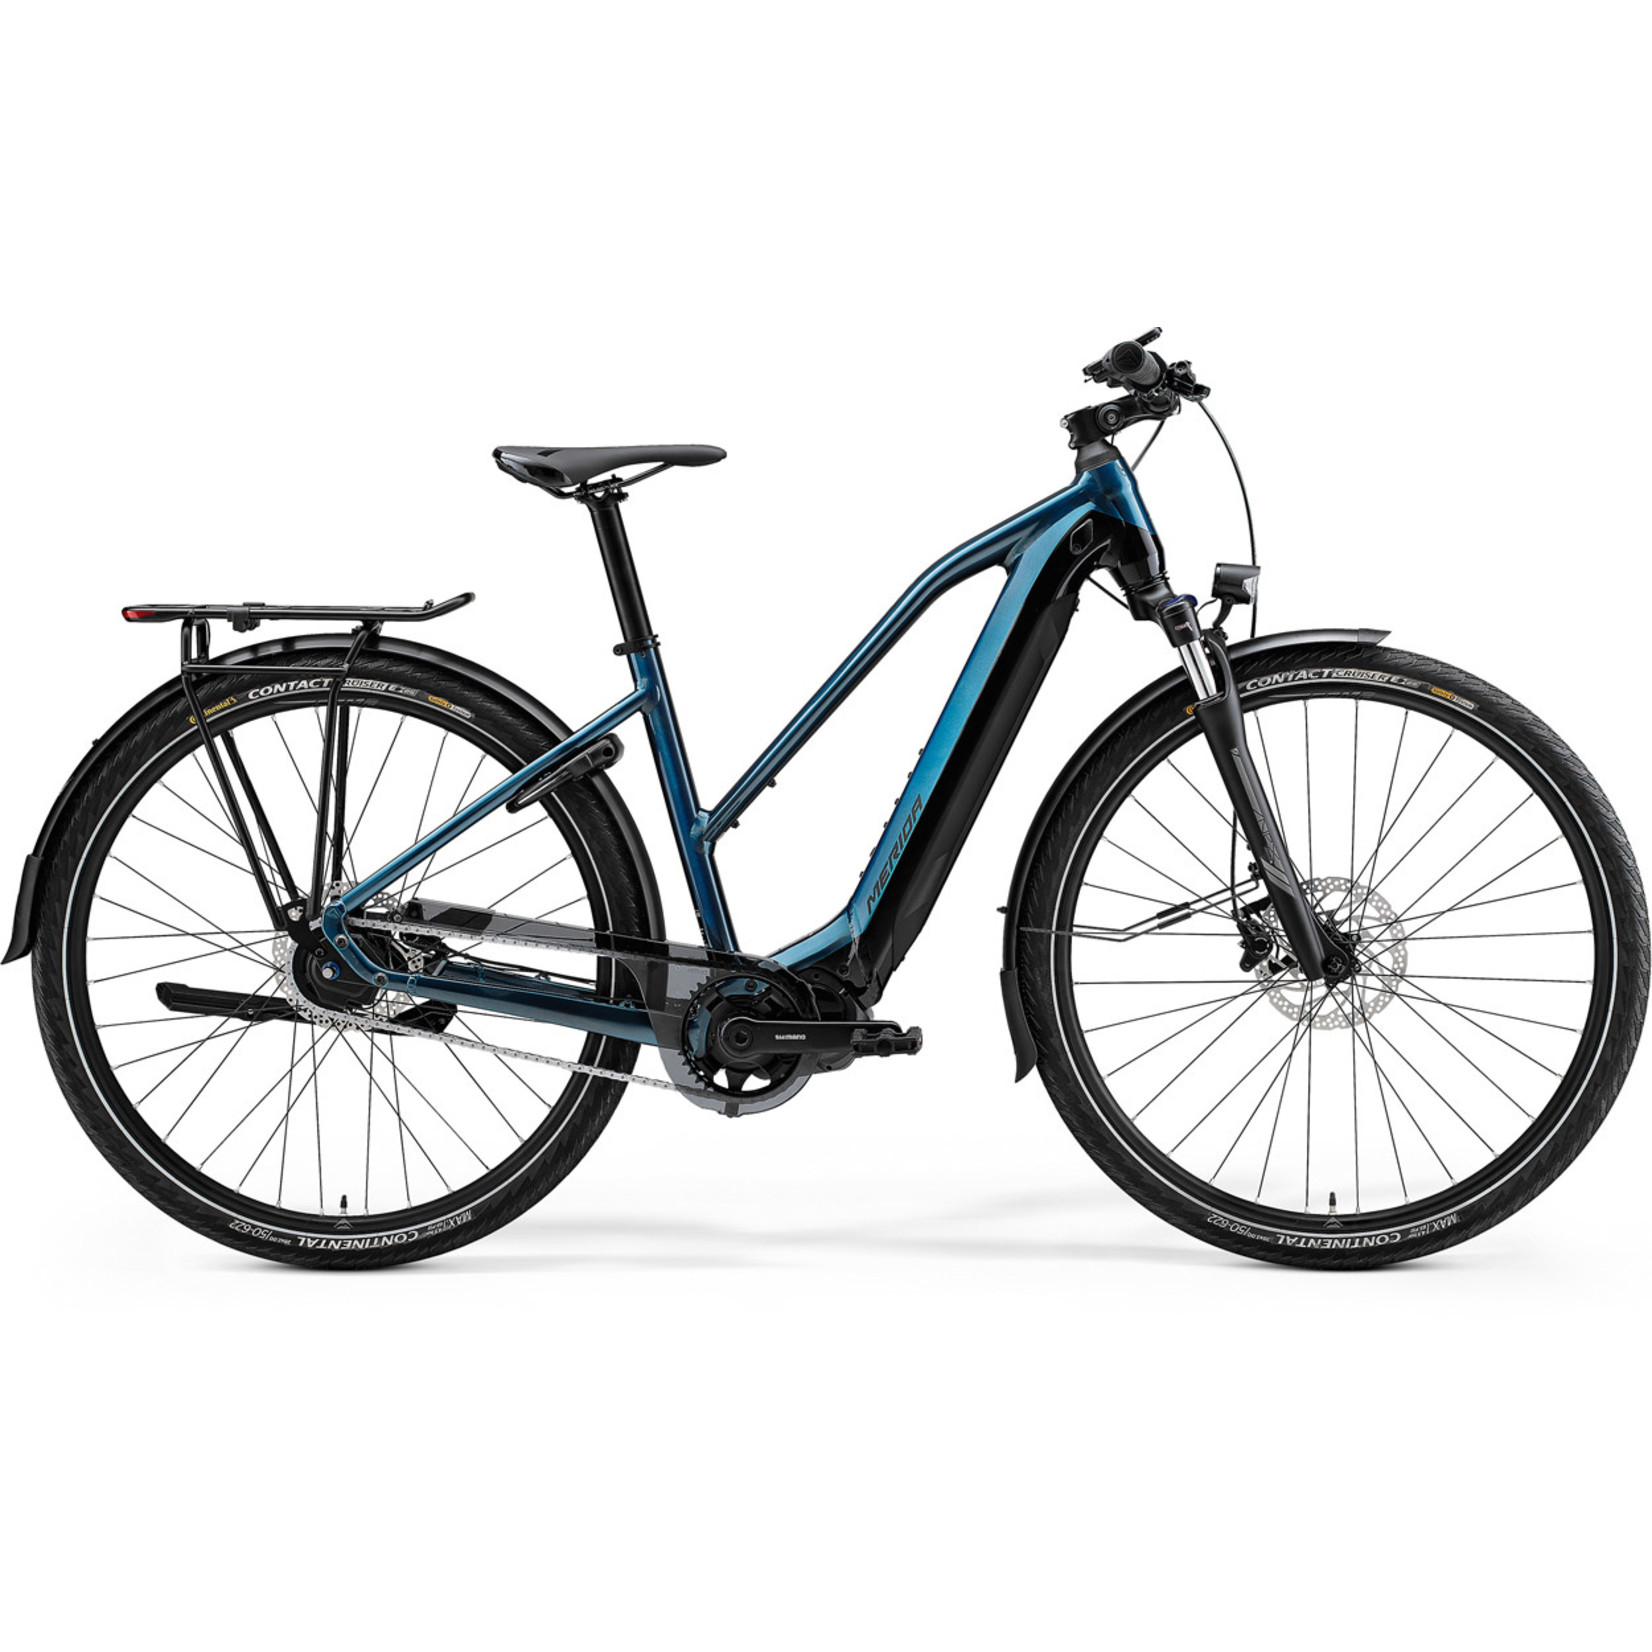 Merida Merida eSPRESSO 700 EQ Women's Electric Bike - Teal Blue/Black - Small (47)